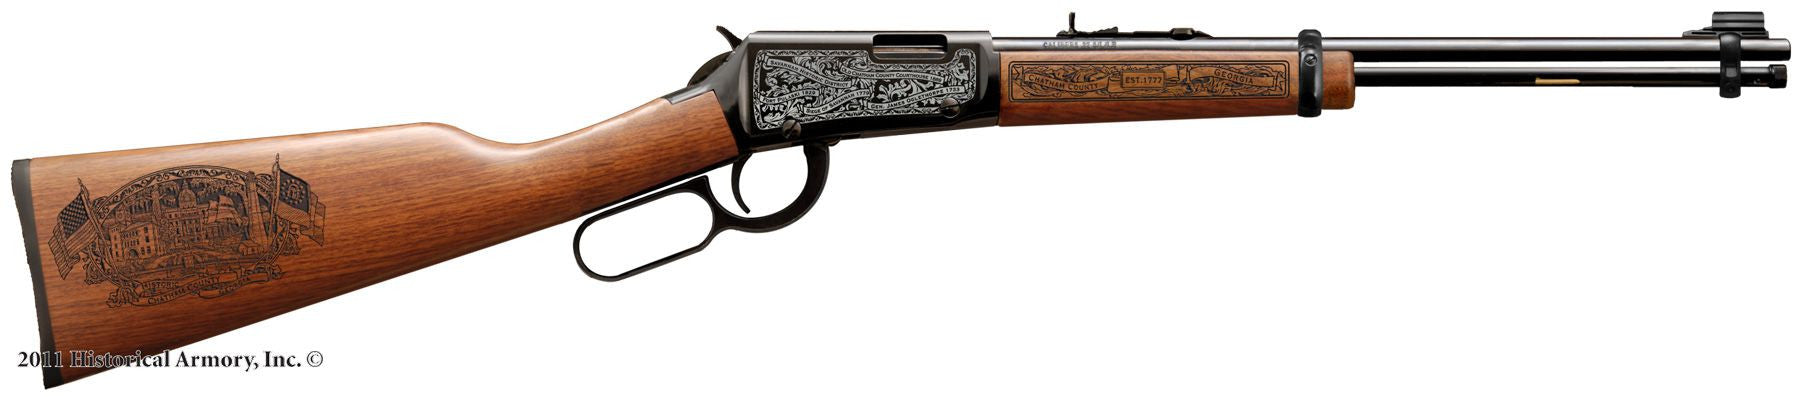 Chatham county georgia engraved rifle H001